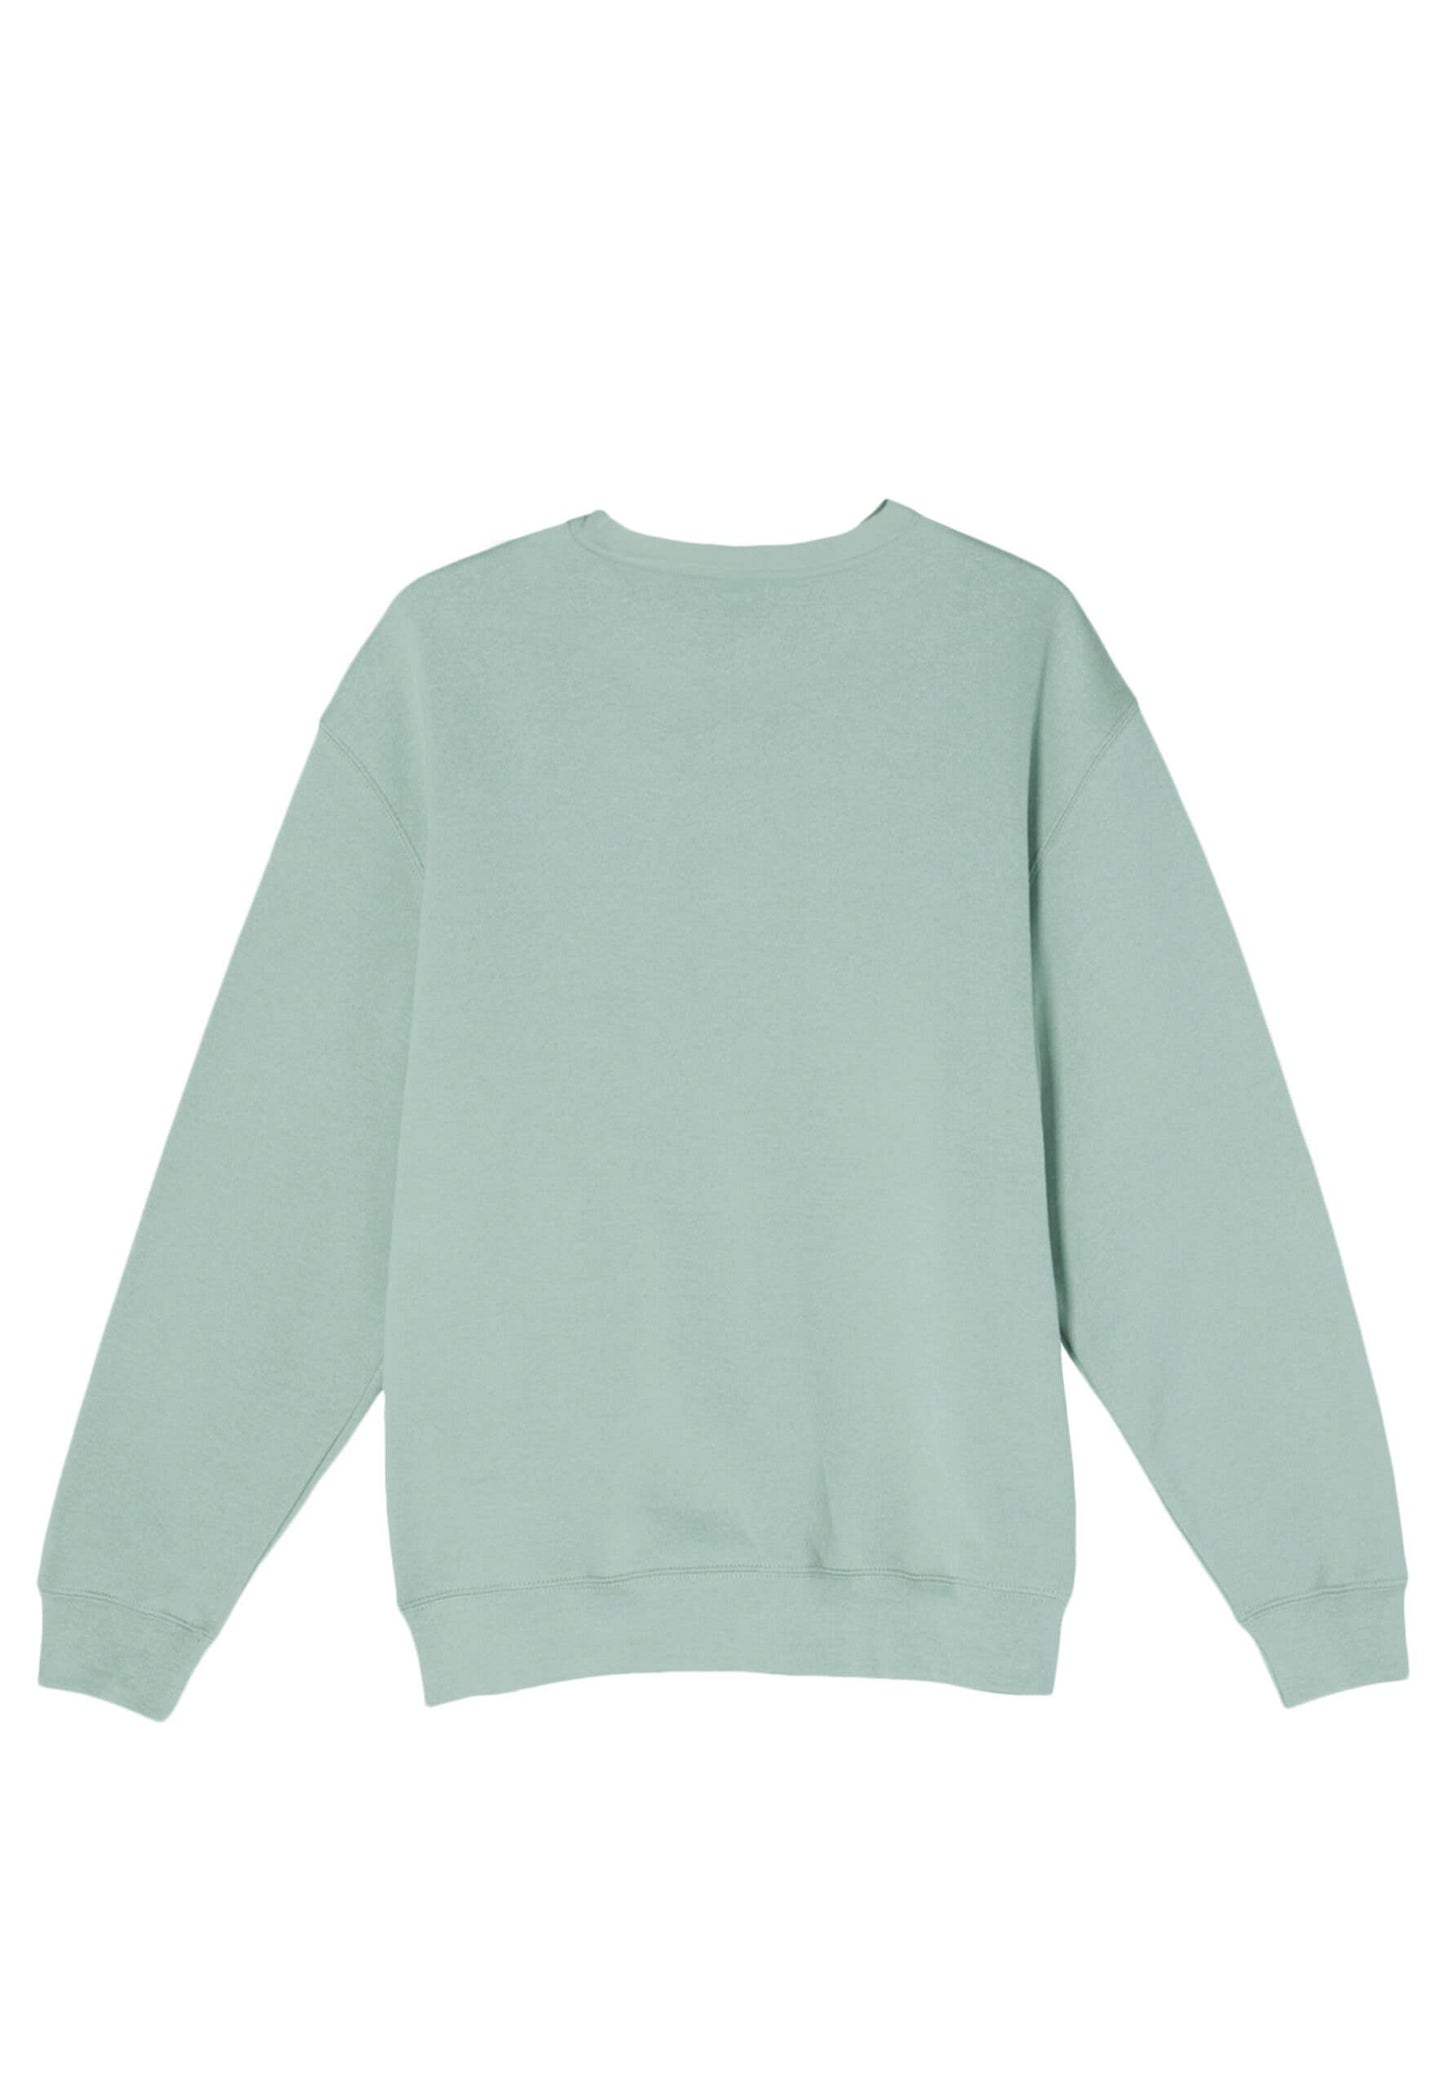 Premium Crewneck Sweatshirt - For Men & Women: L / Charcoal Heather